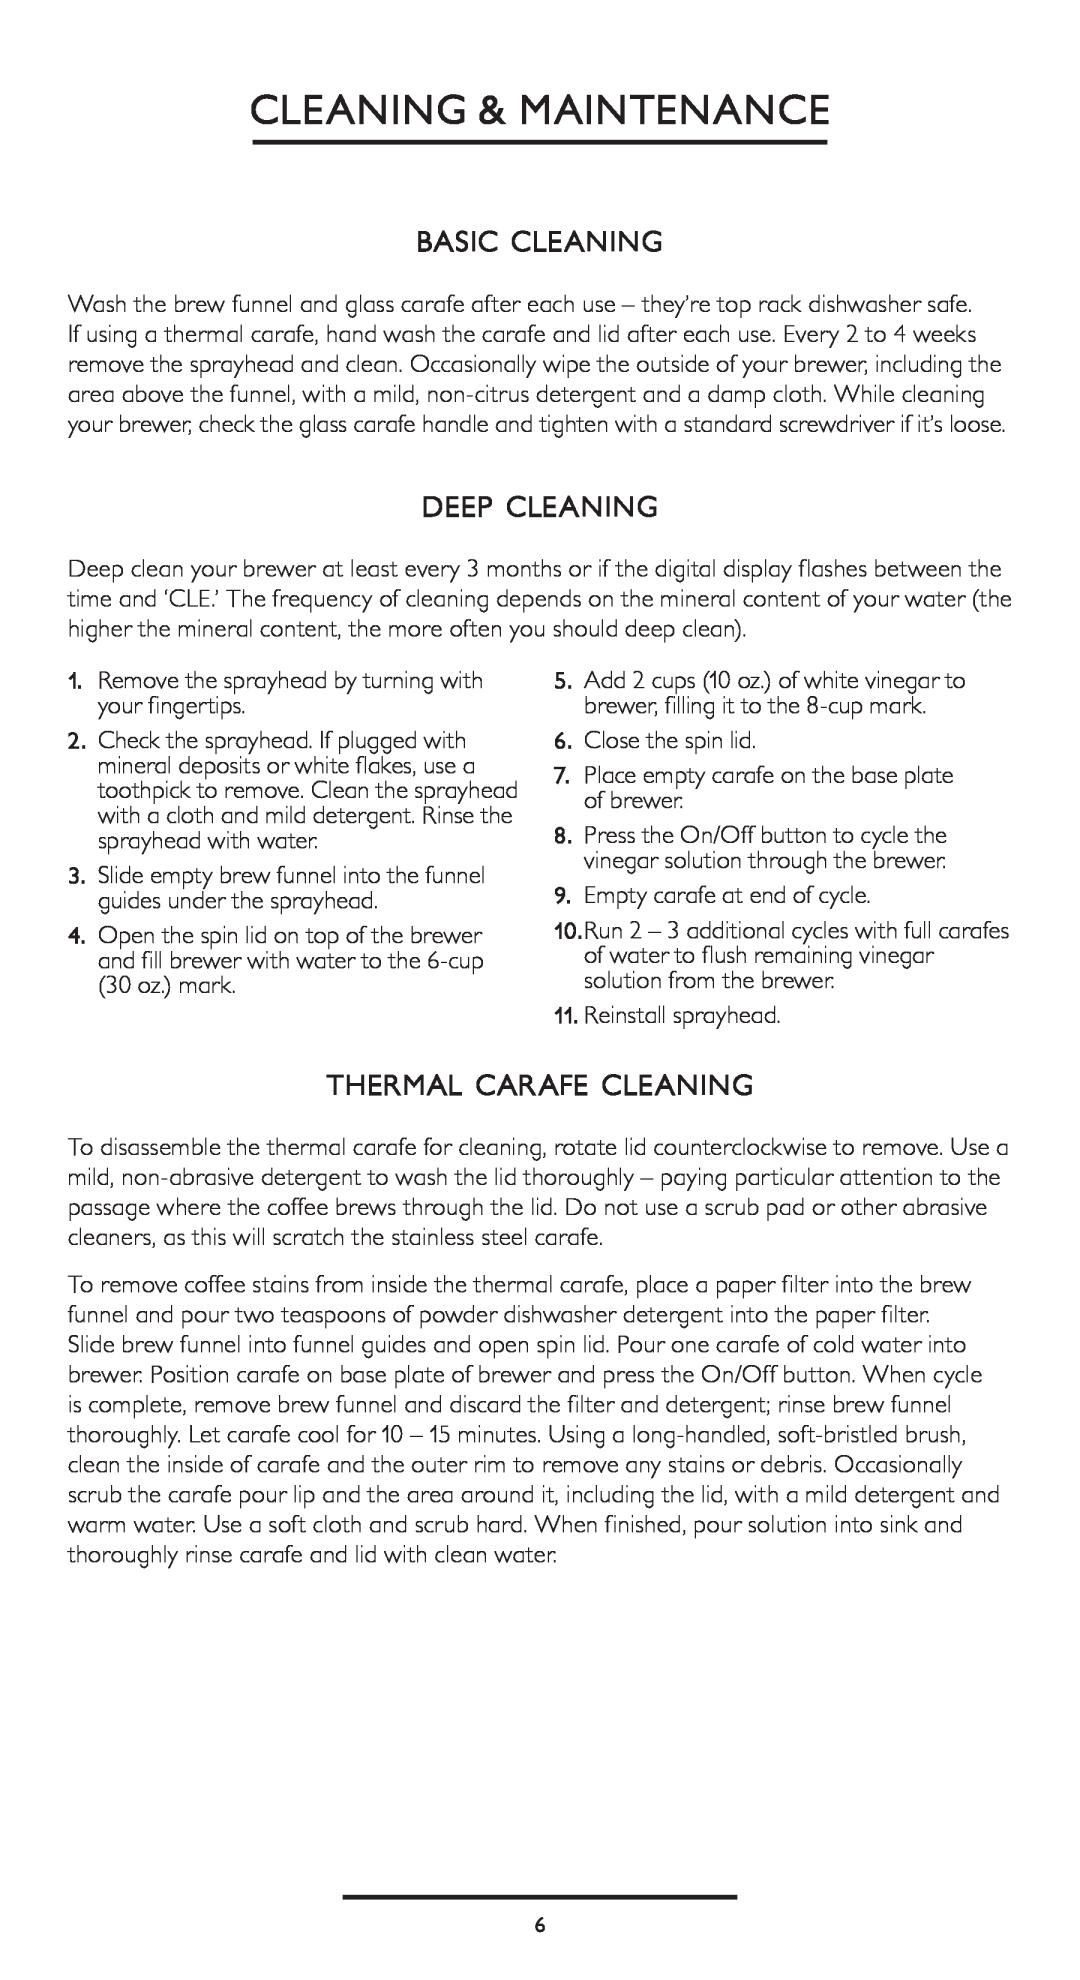 Bunn HG manual Cleaning & Maintenance, basic cleaning, deep cleaning, thermal carafe cleaning 